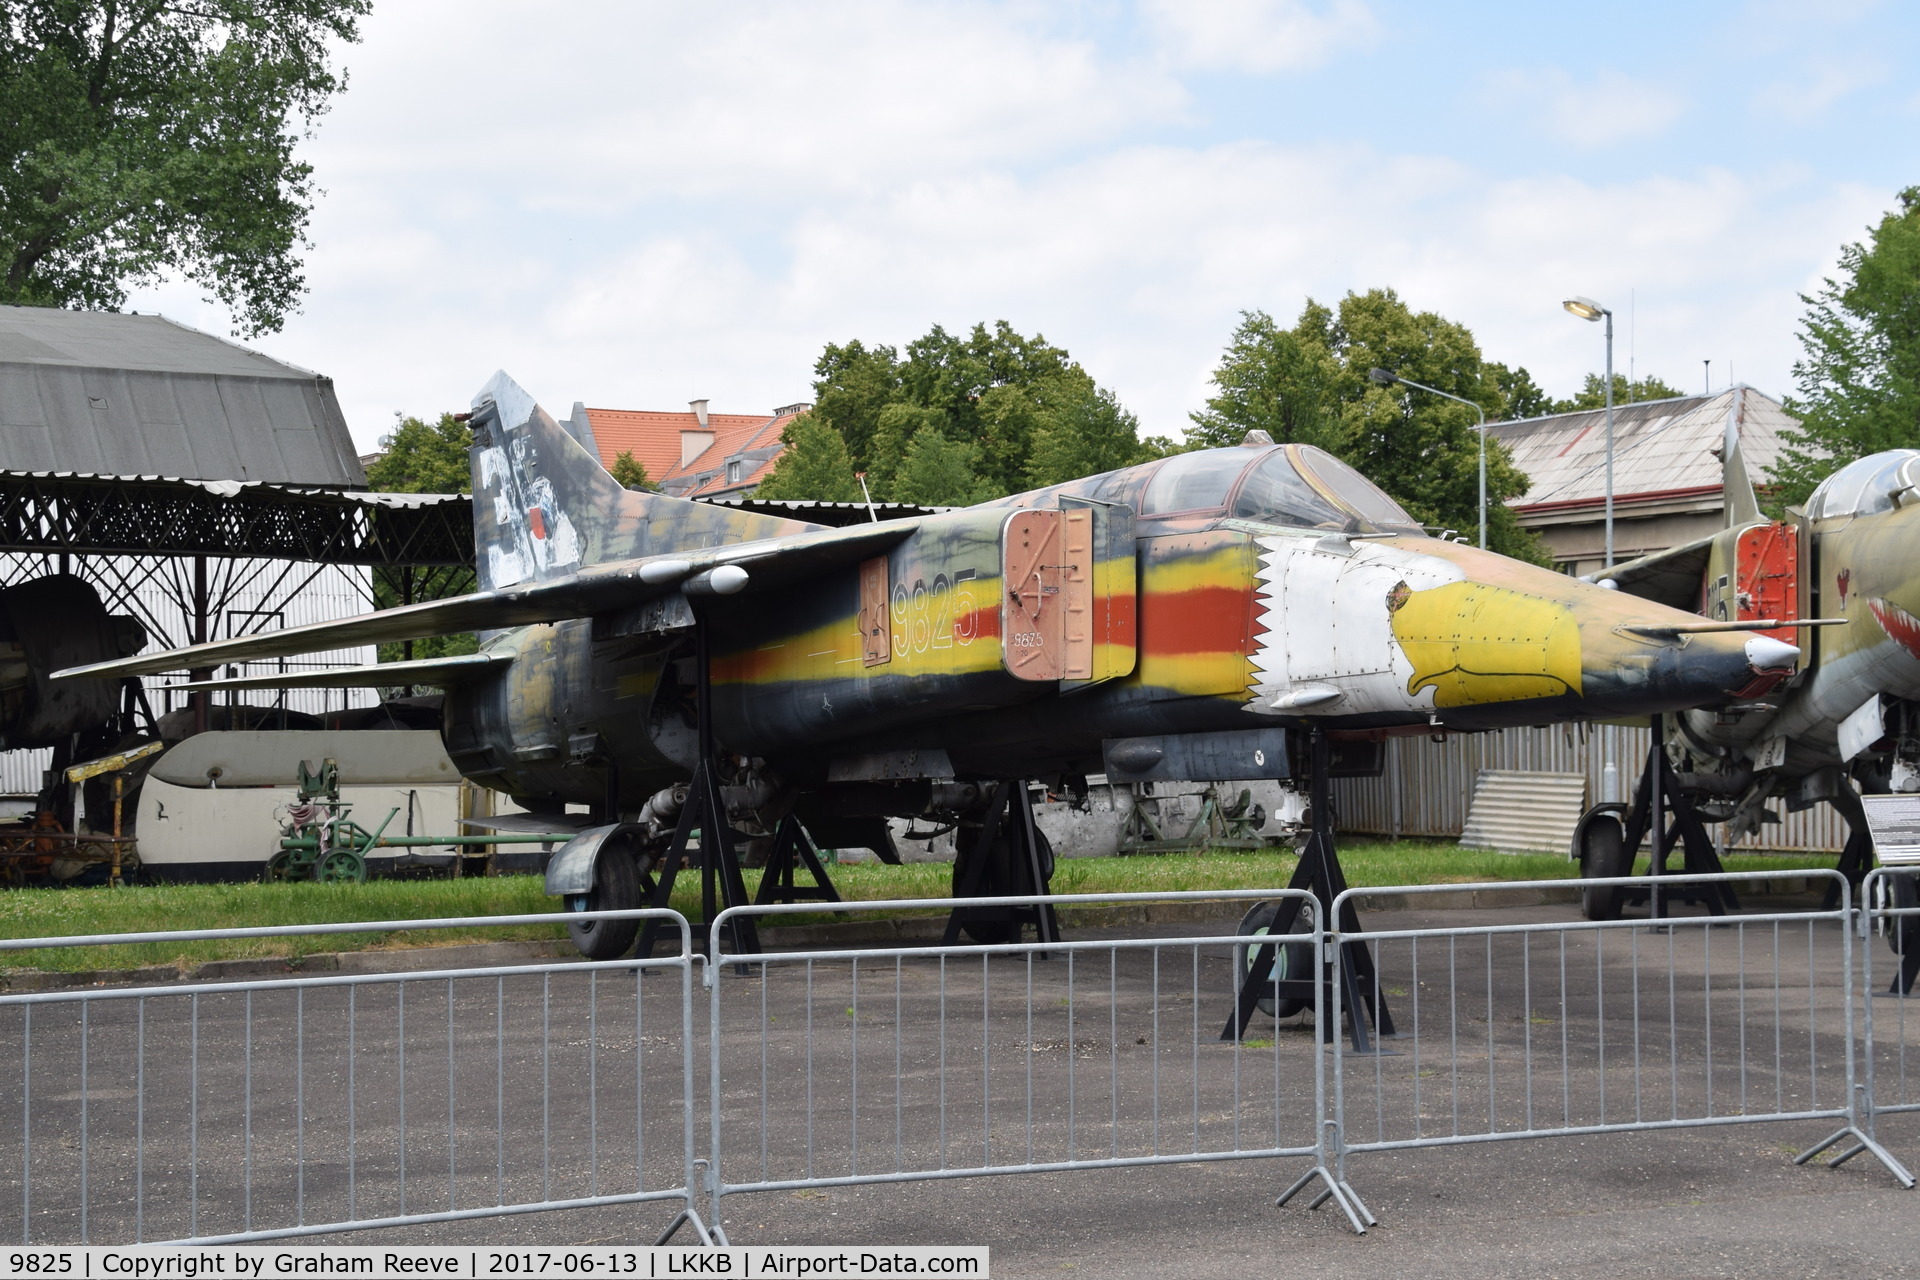 9825, 1982 Mikoyan-Gurevich MiG-23BN C/N 0393219825, Displayed at the 